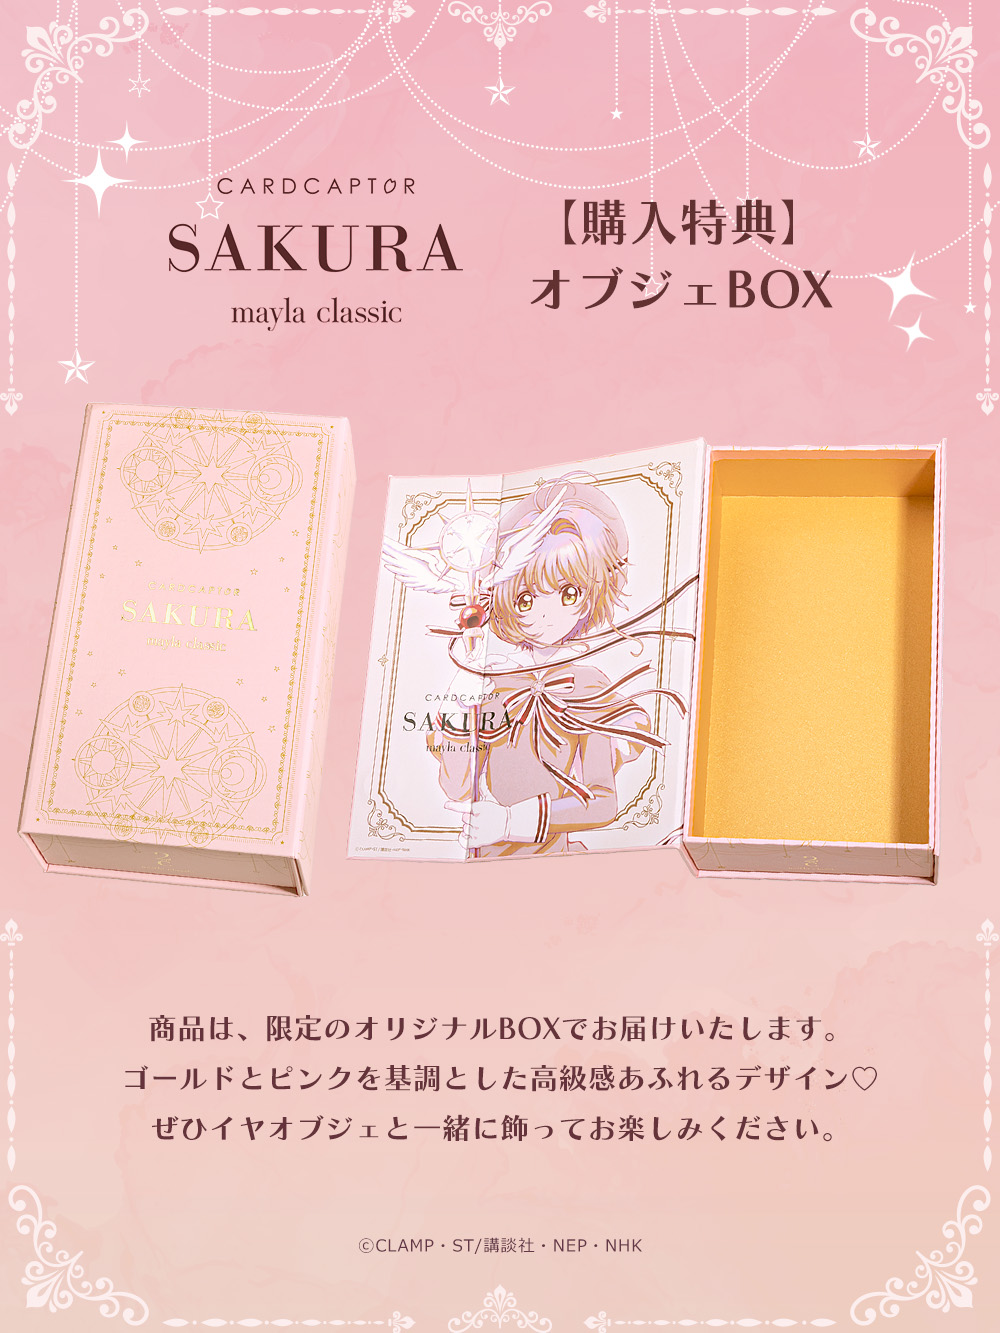 Second collaboration Cardcaptor Sakura x Mayla Classic, Purchase benefits